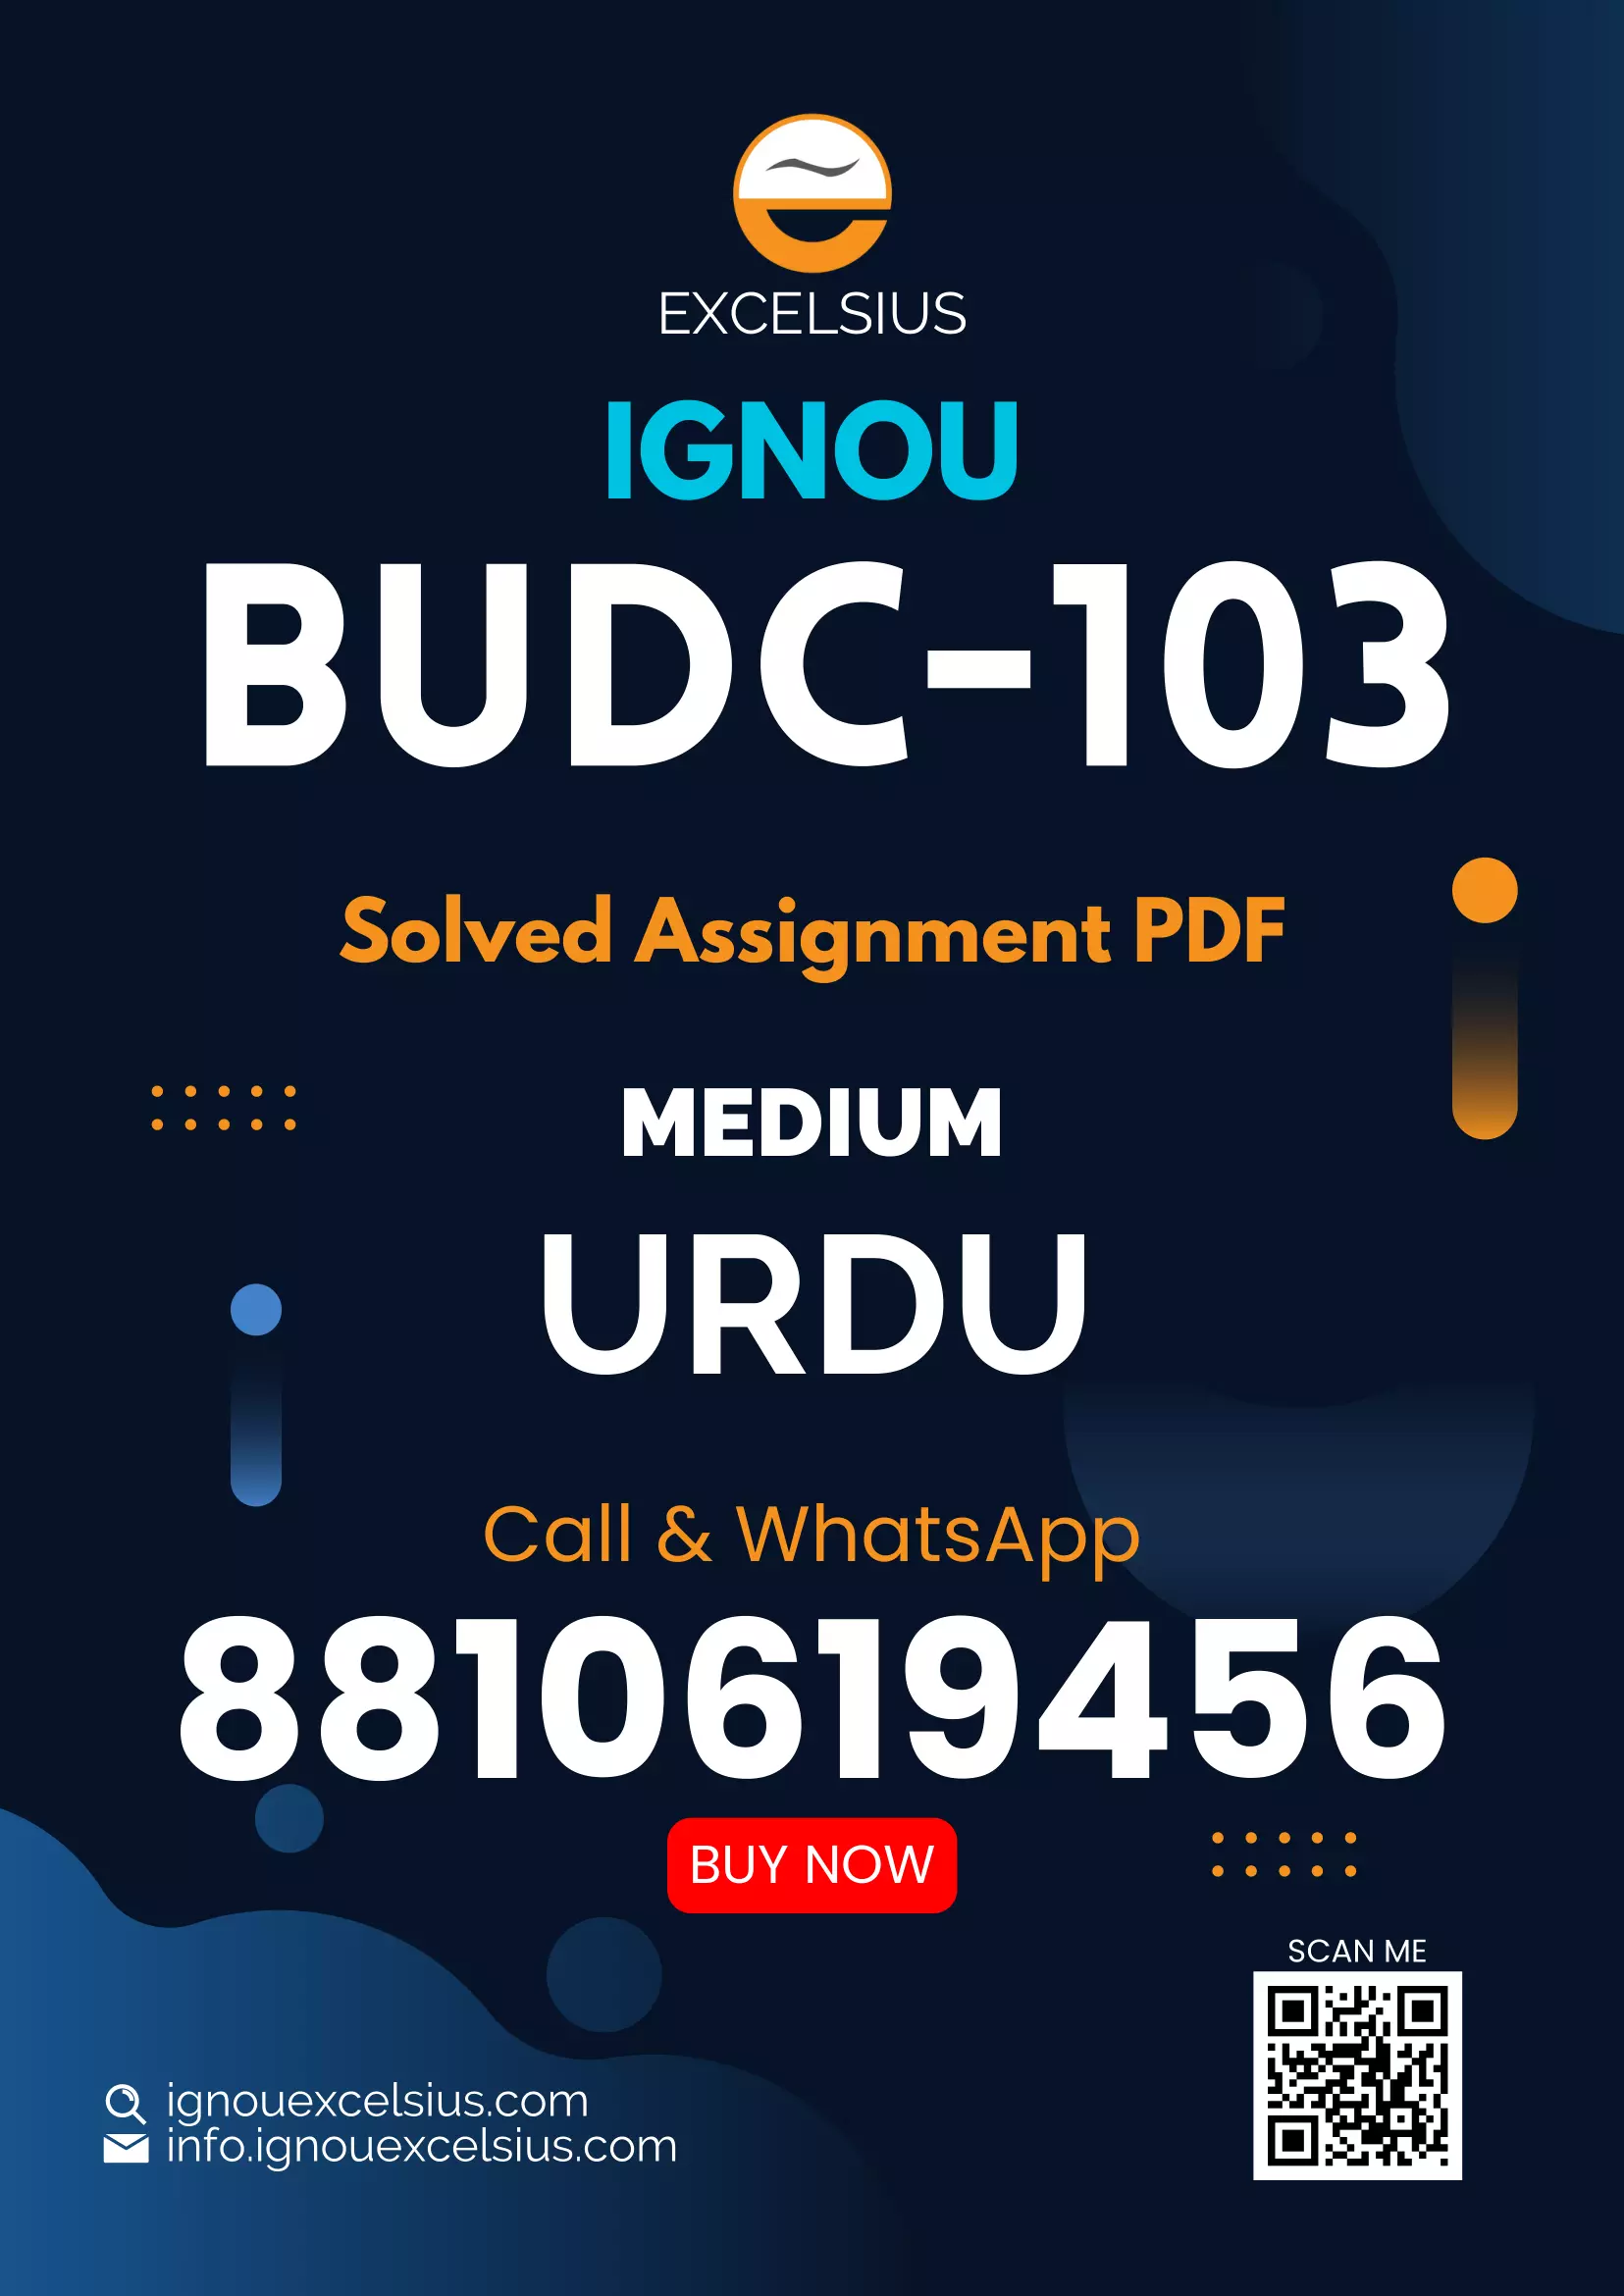 IGNOU BUDC-103 - Study of Modern Urdu Nazm Latest Solved Assignment-July 2022 – January 2023